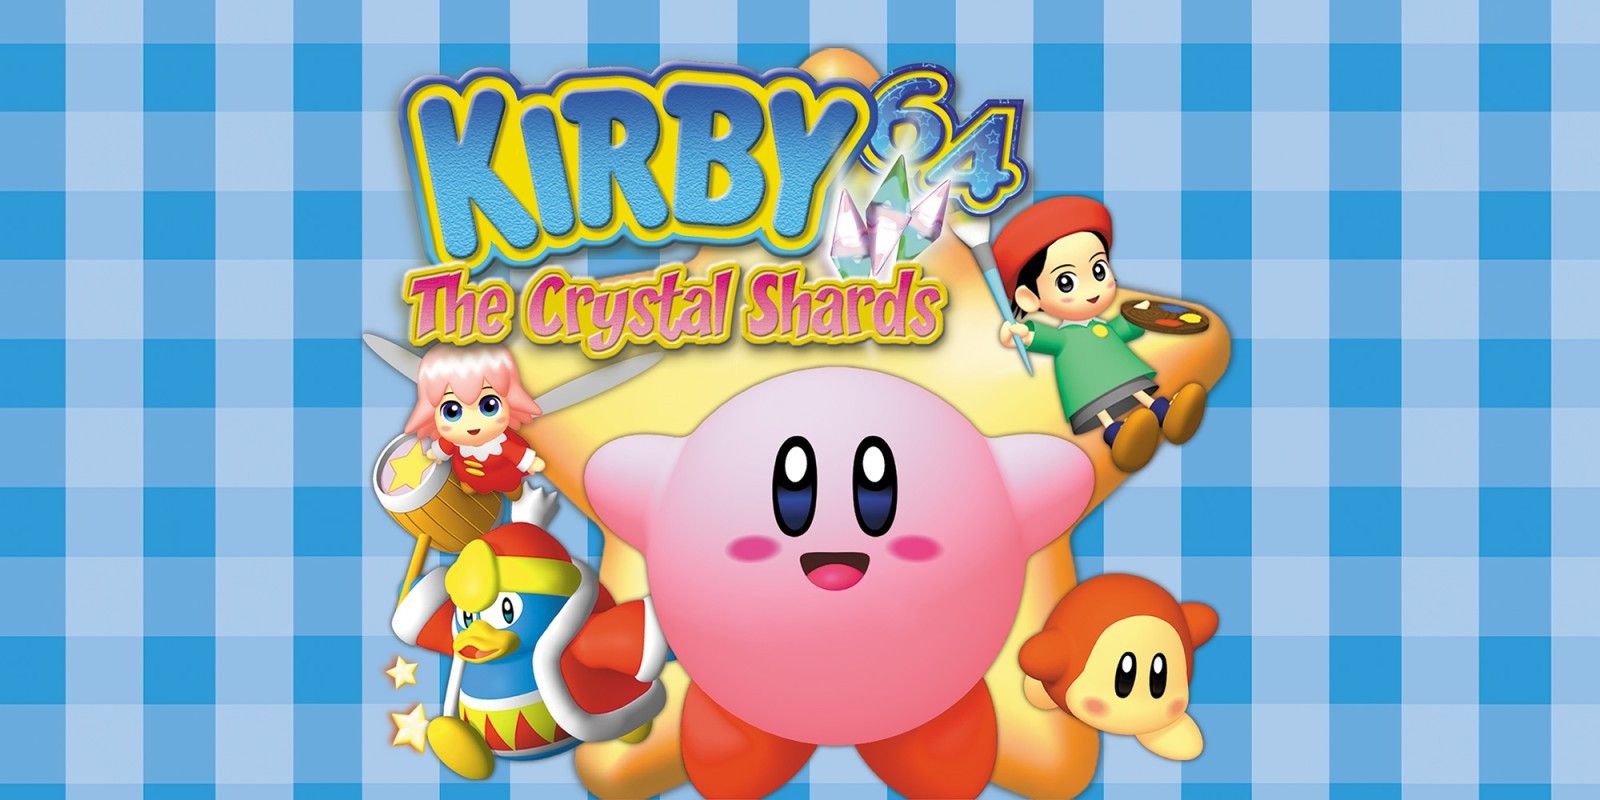 Kirby 64 Fans Encounter Game-Breaking Glitch On Nintendo Switch Online